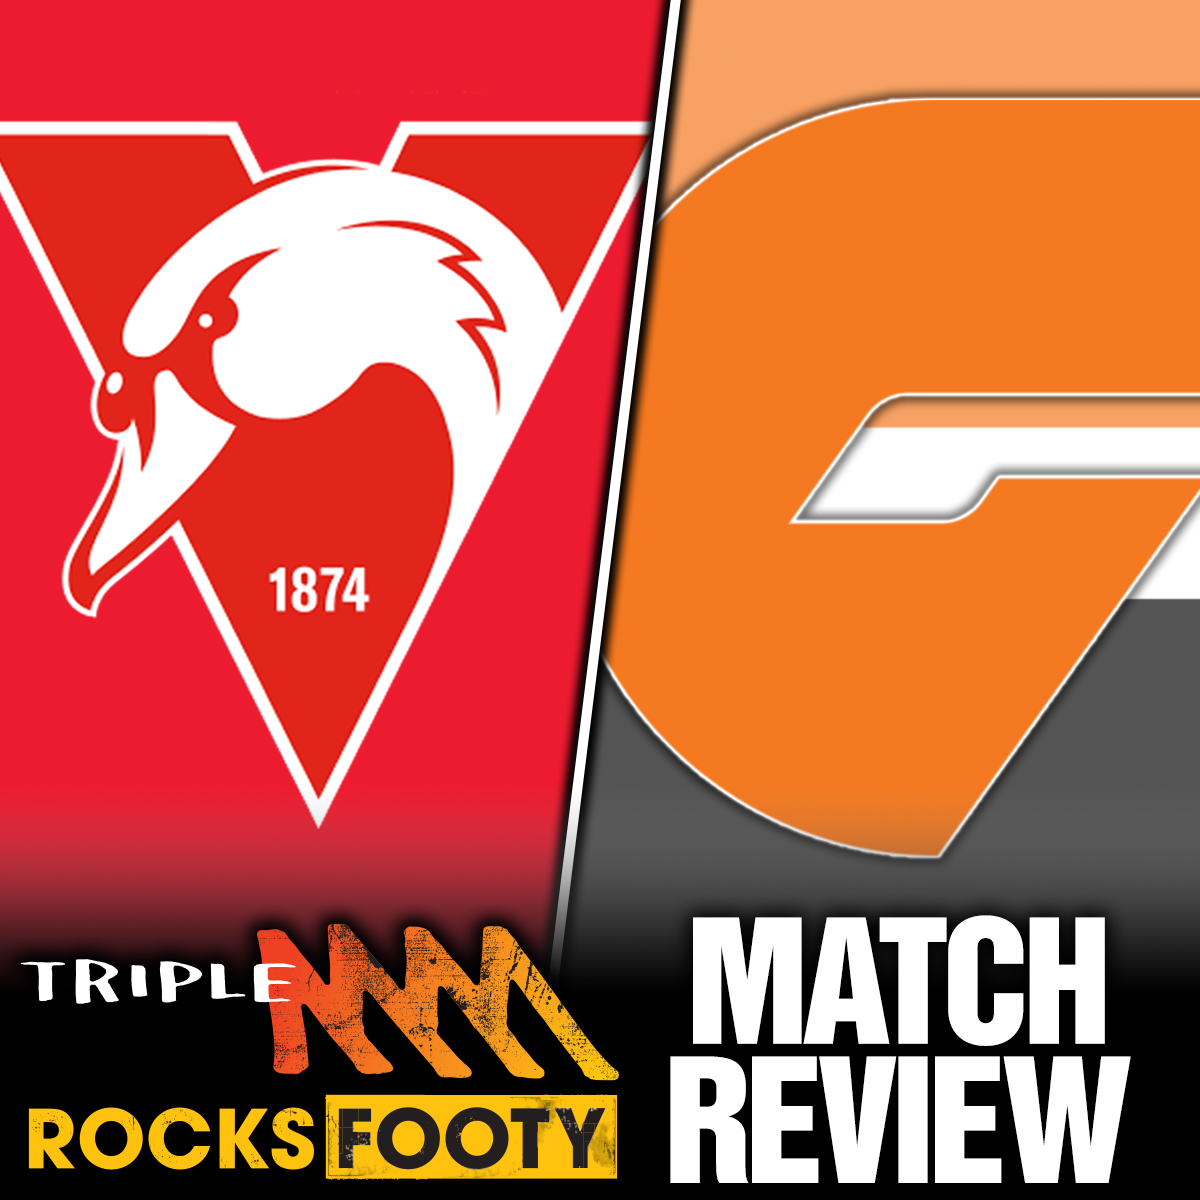 Sydney vs GWS match review